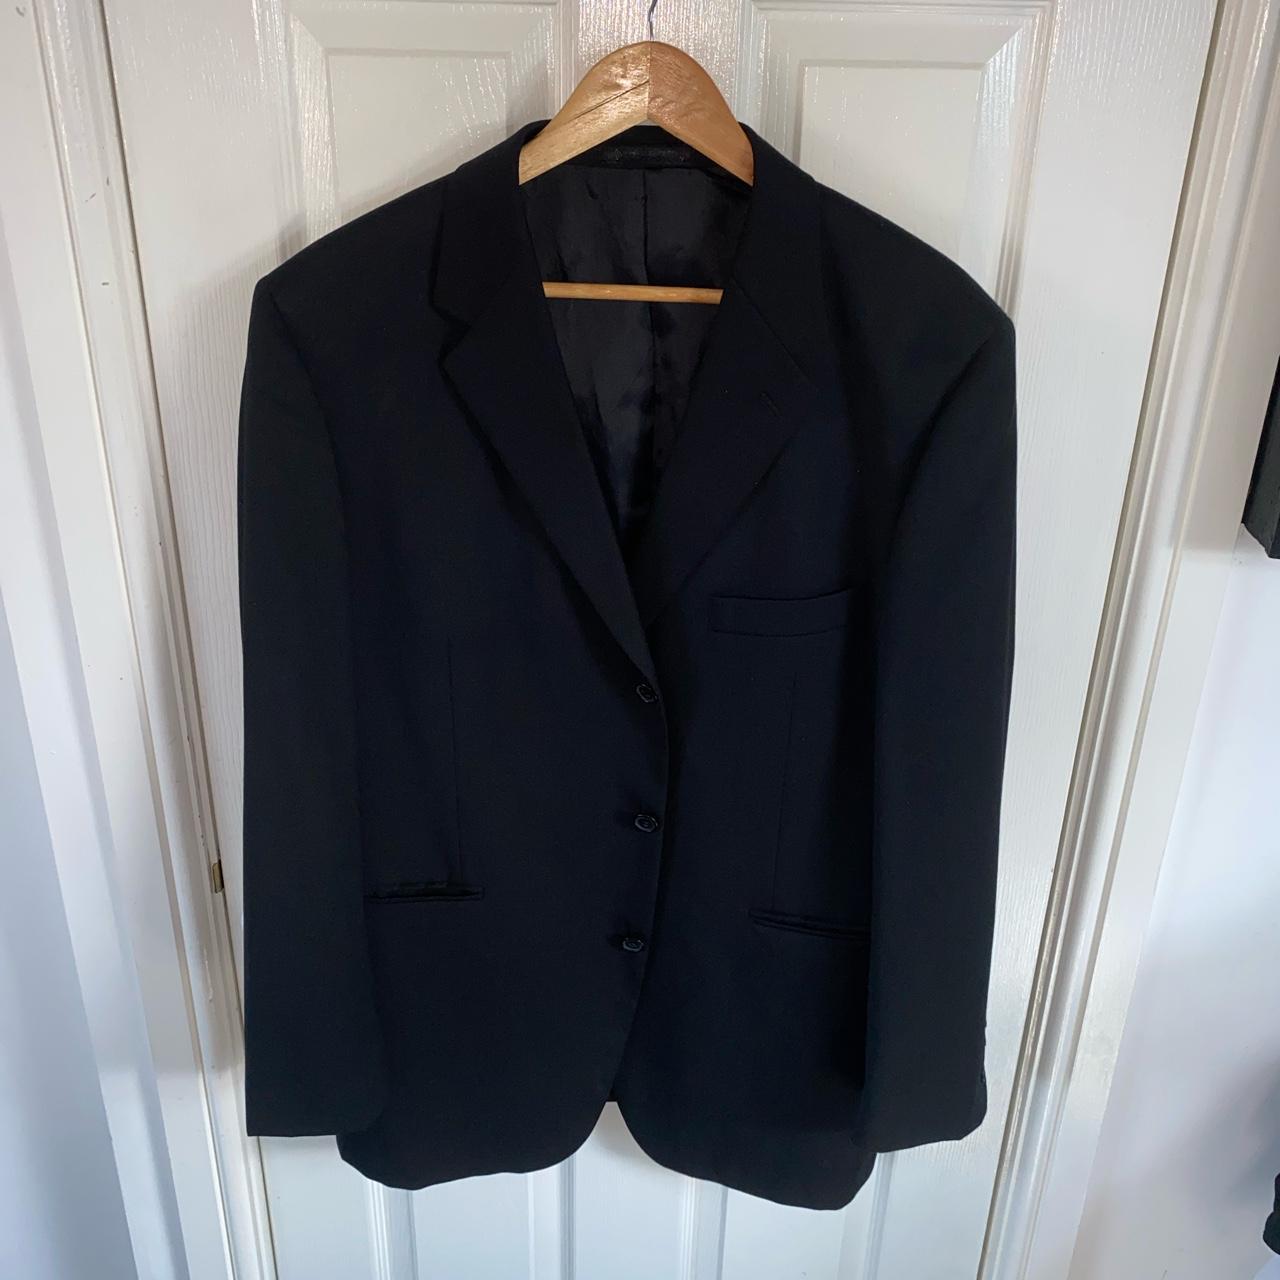 Yves Saint Laurent/ YSL Full Suit (Black) Size 54S... - Depop